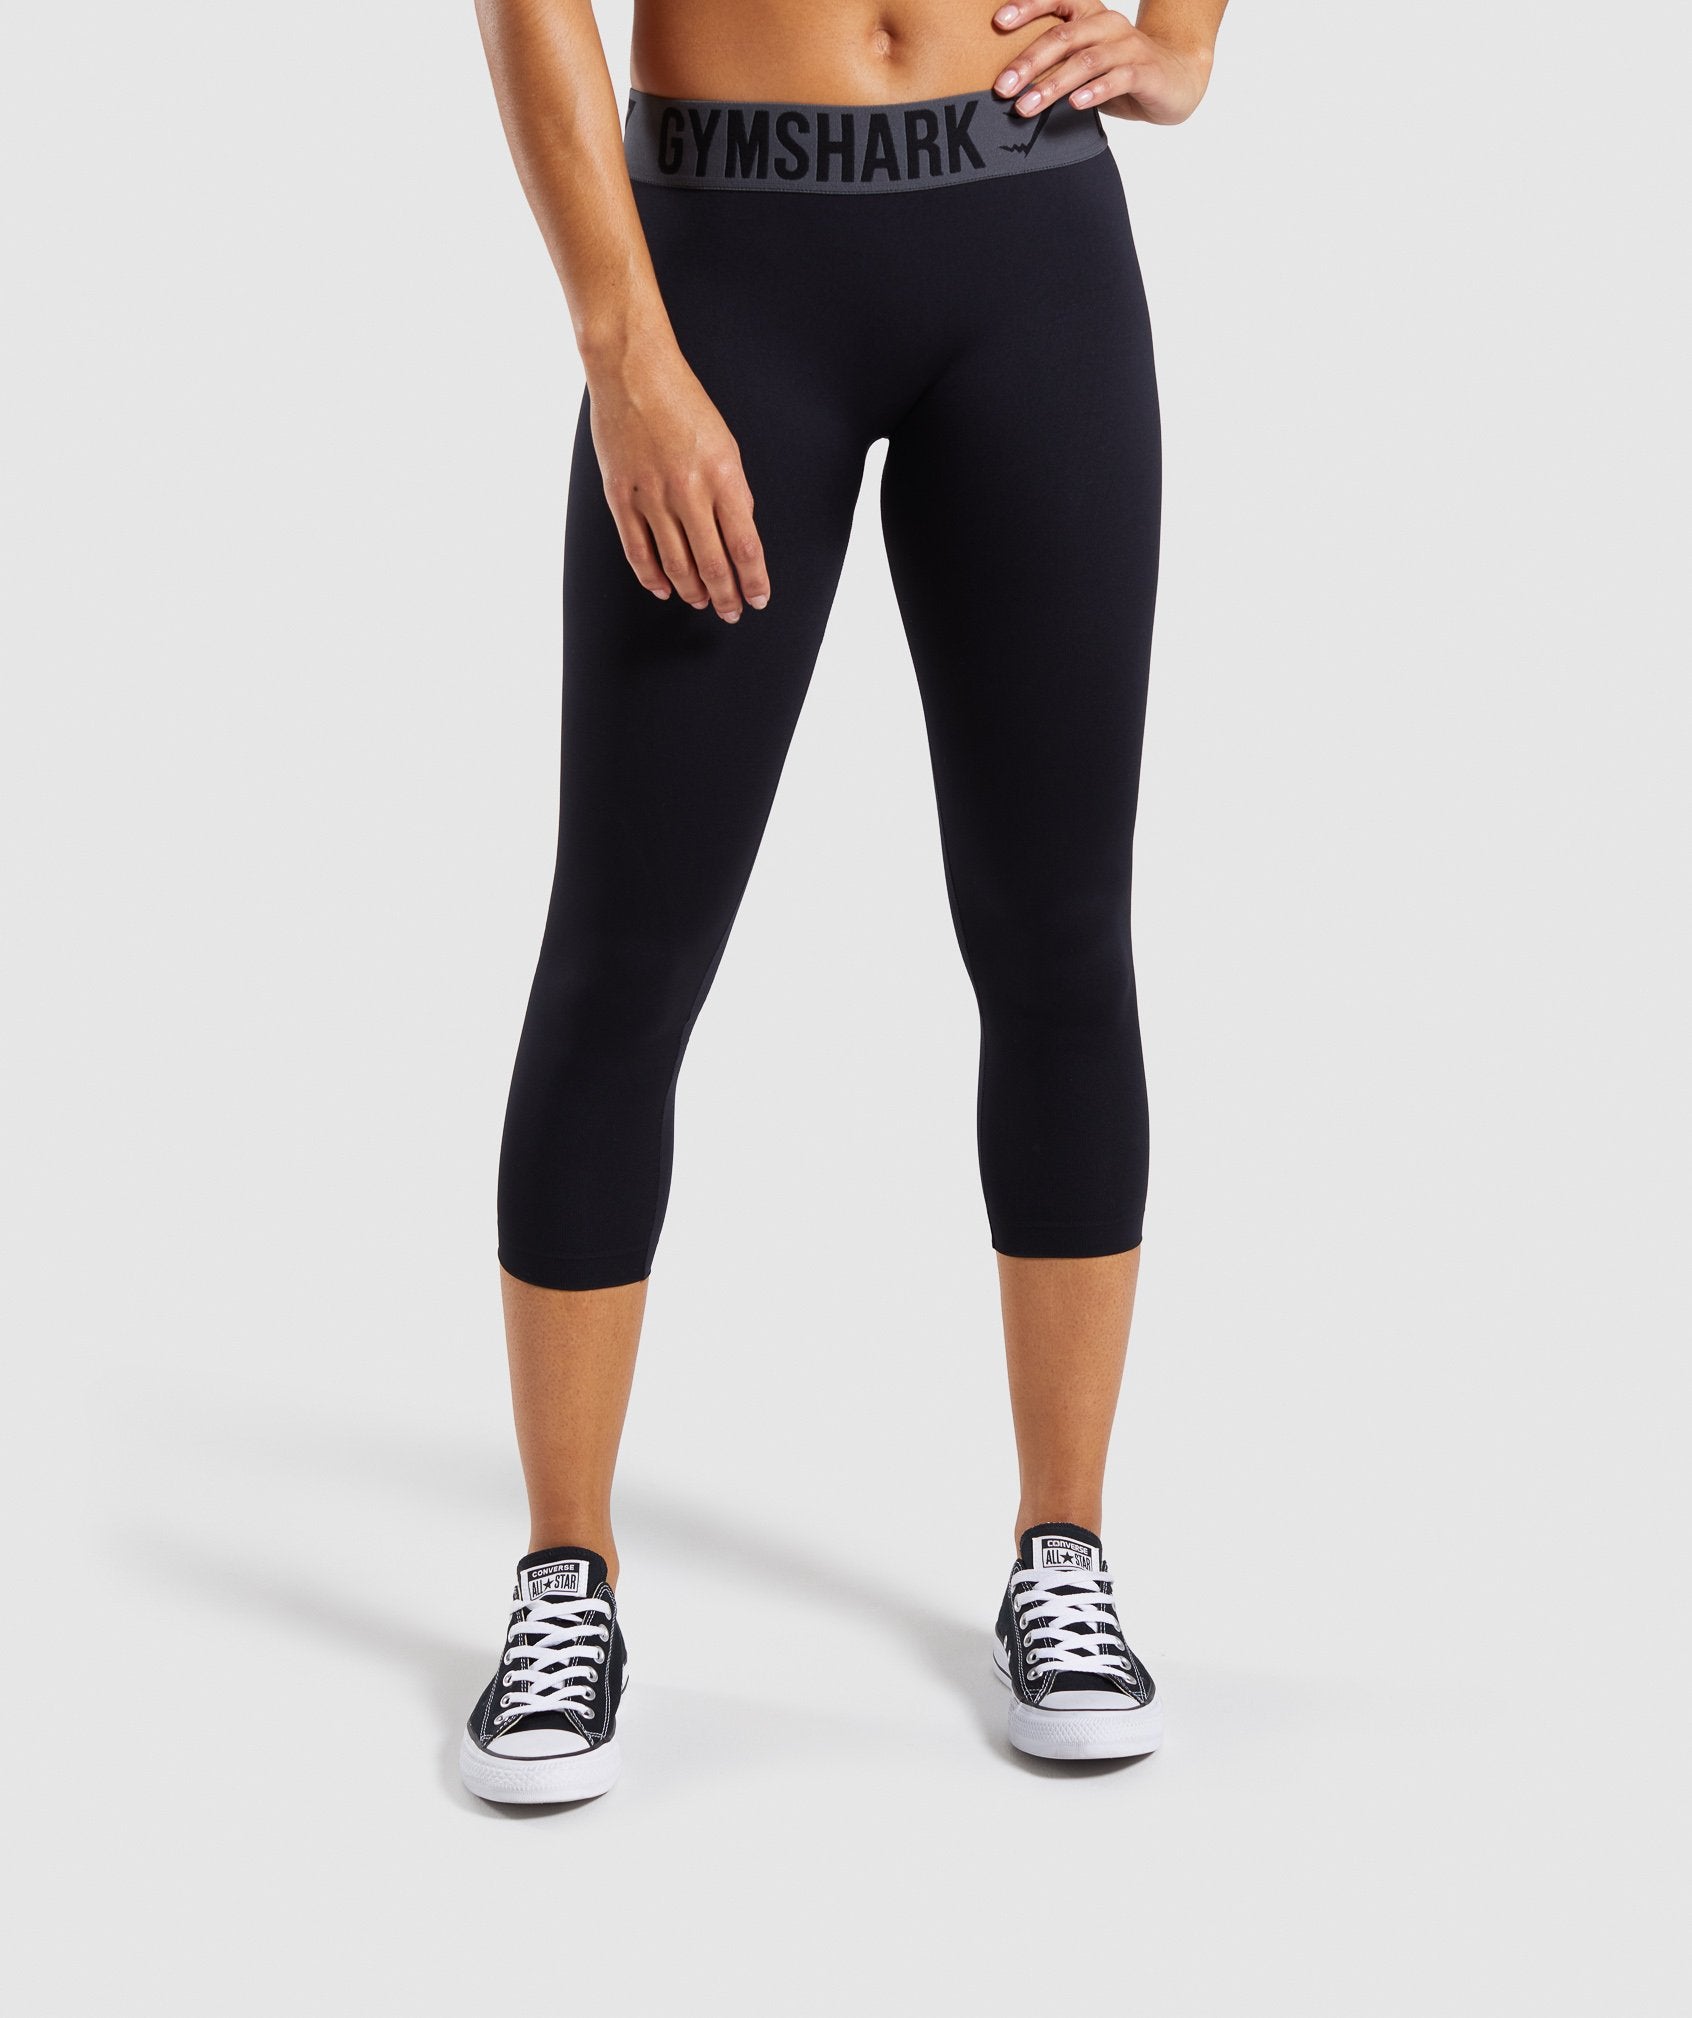 Gymshark Ankle Length Active Pants, Tights & Leggings